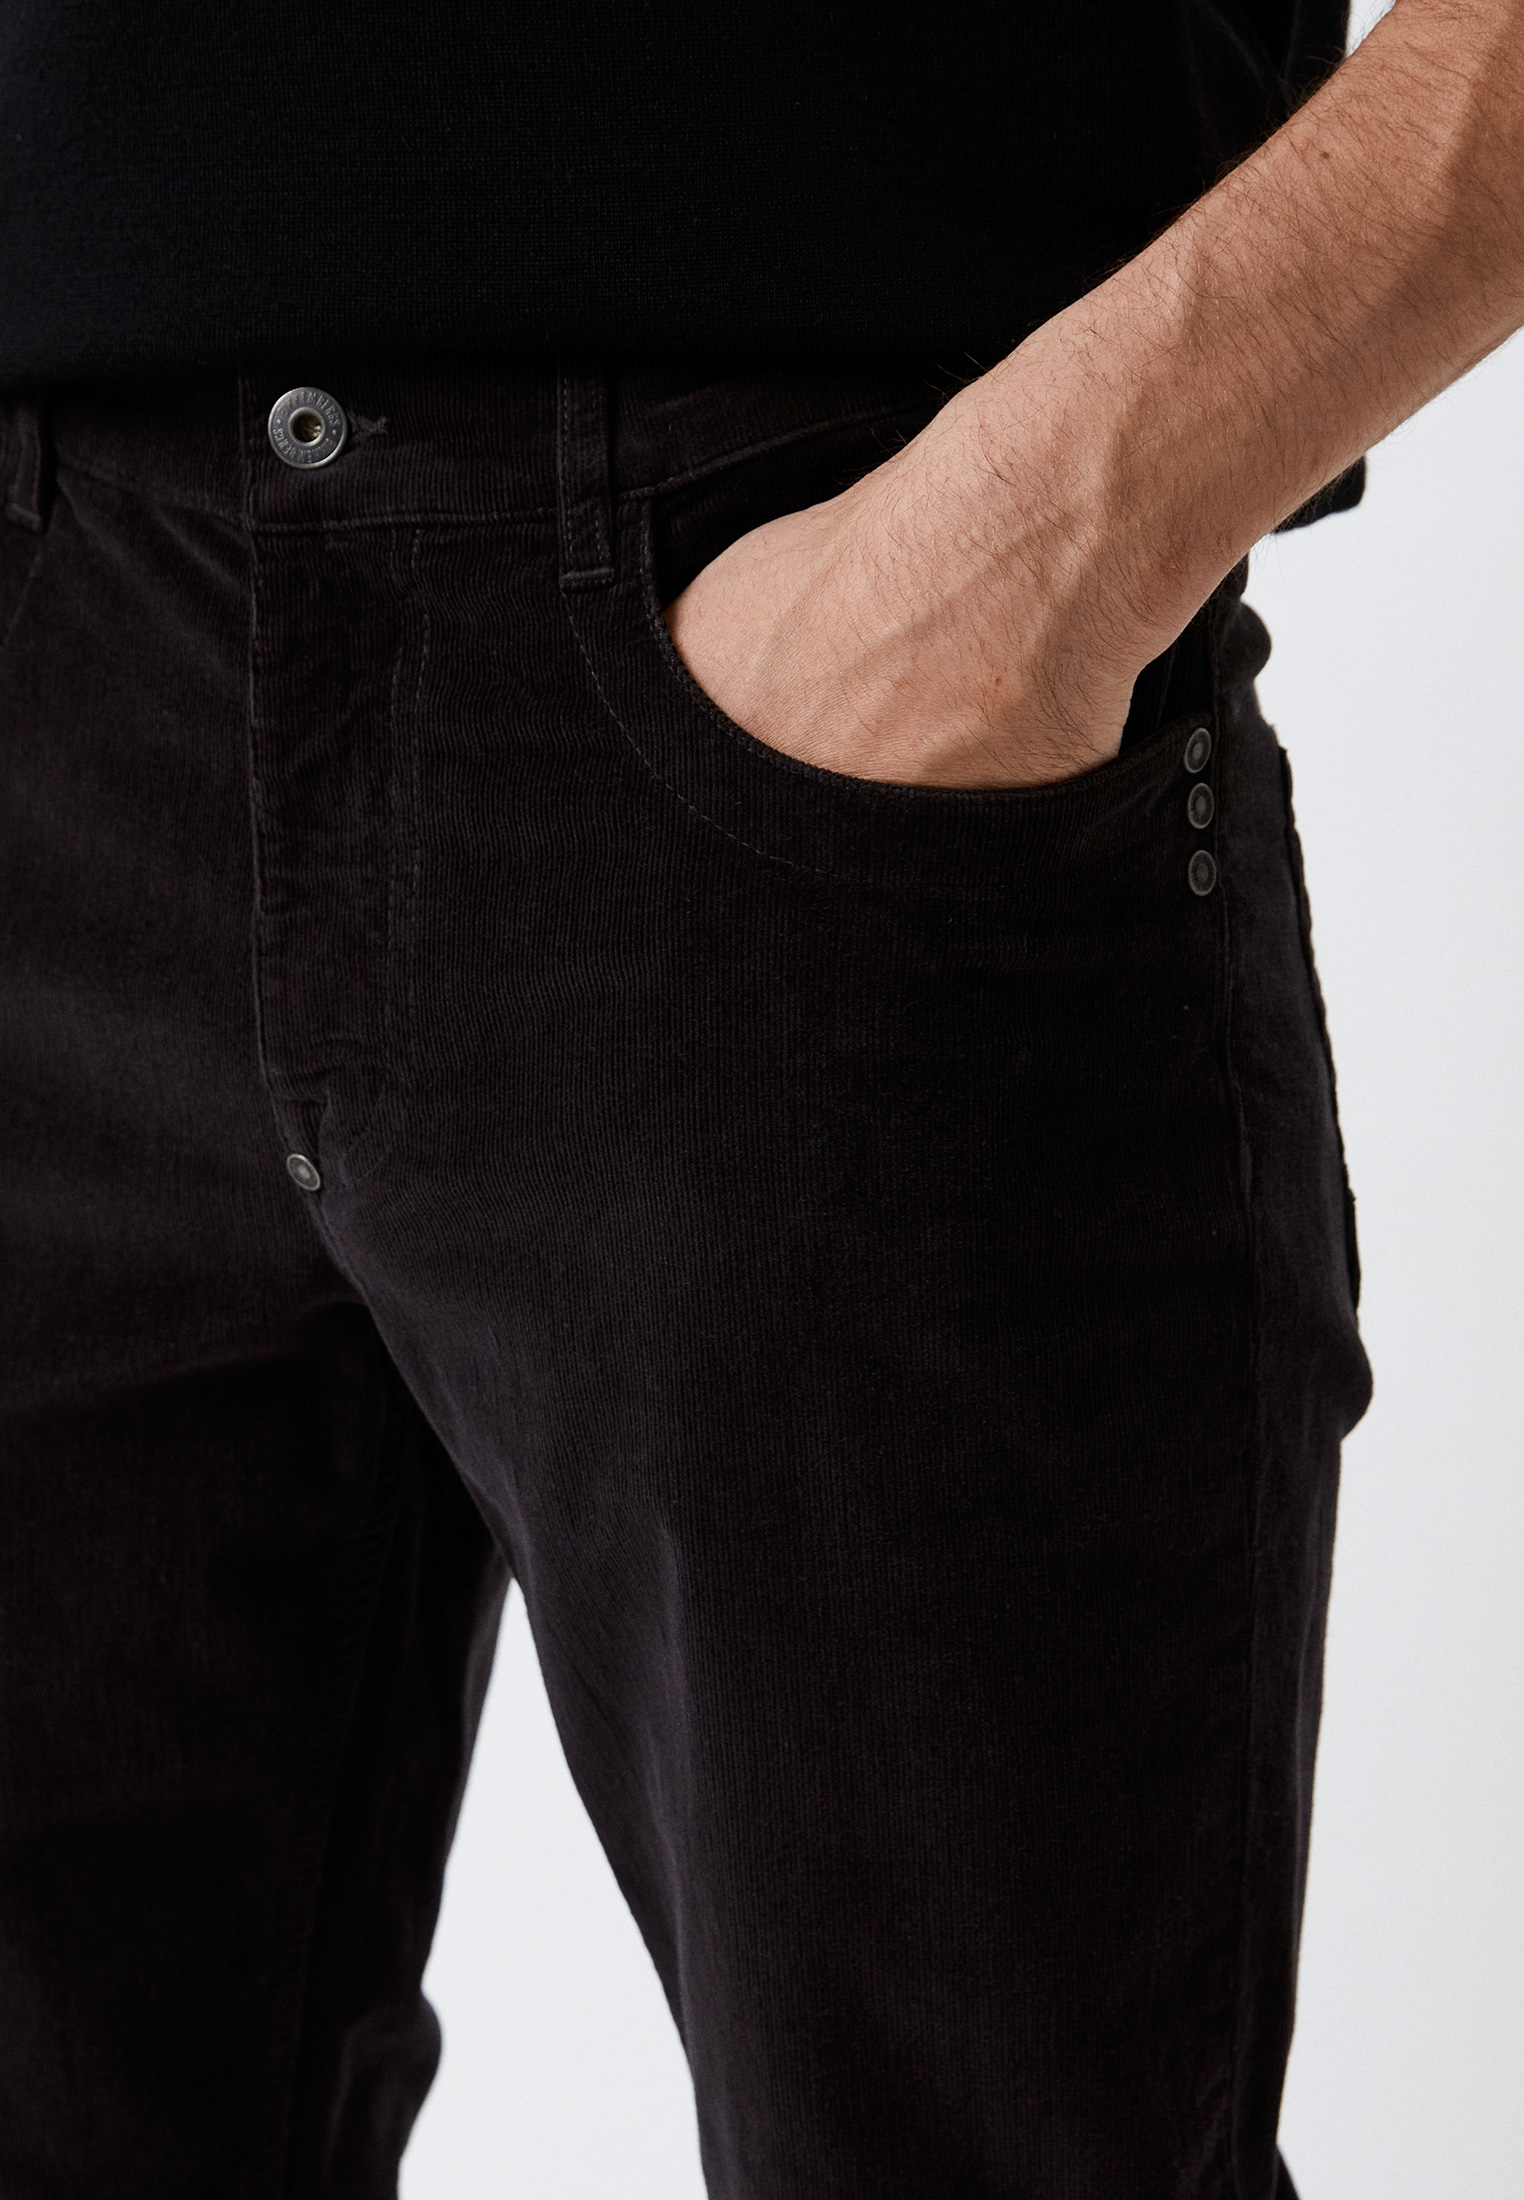 Мужские повседневные брюки Bikkembergs (Биккембергс) C Q 101 8A S 3838: изображение 4